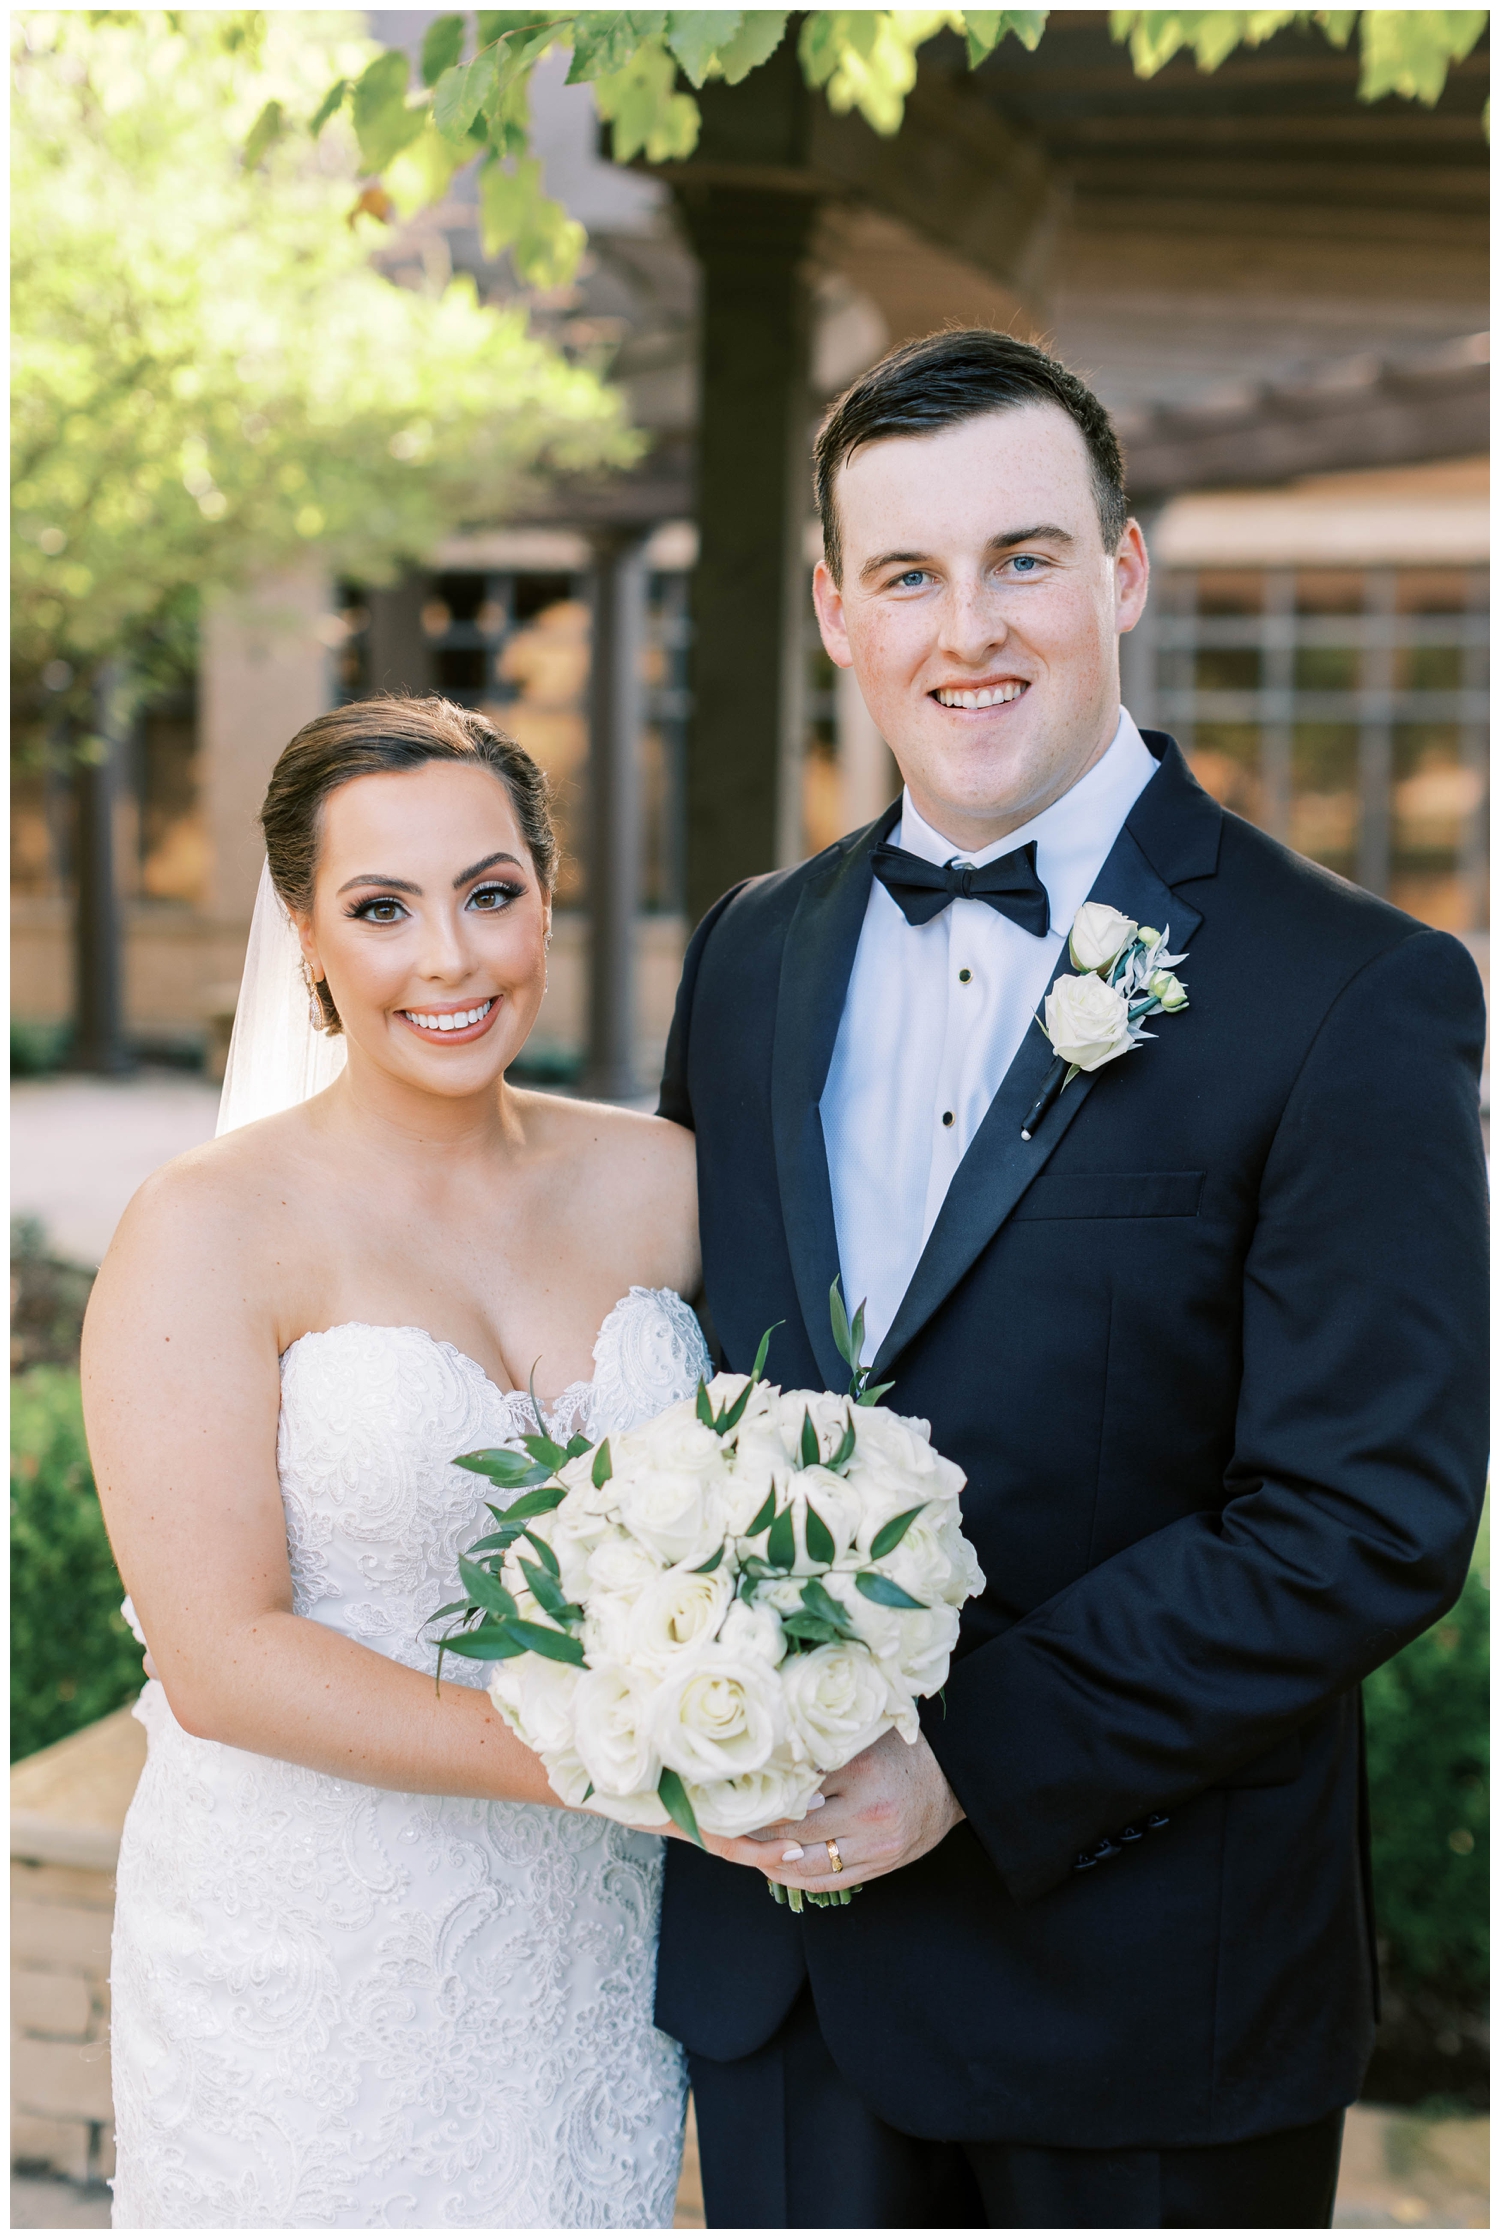 Houston Junior League wedding portrait of bride and groom